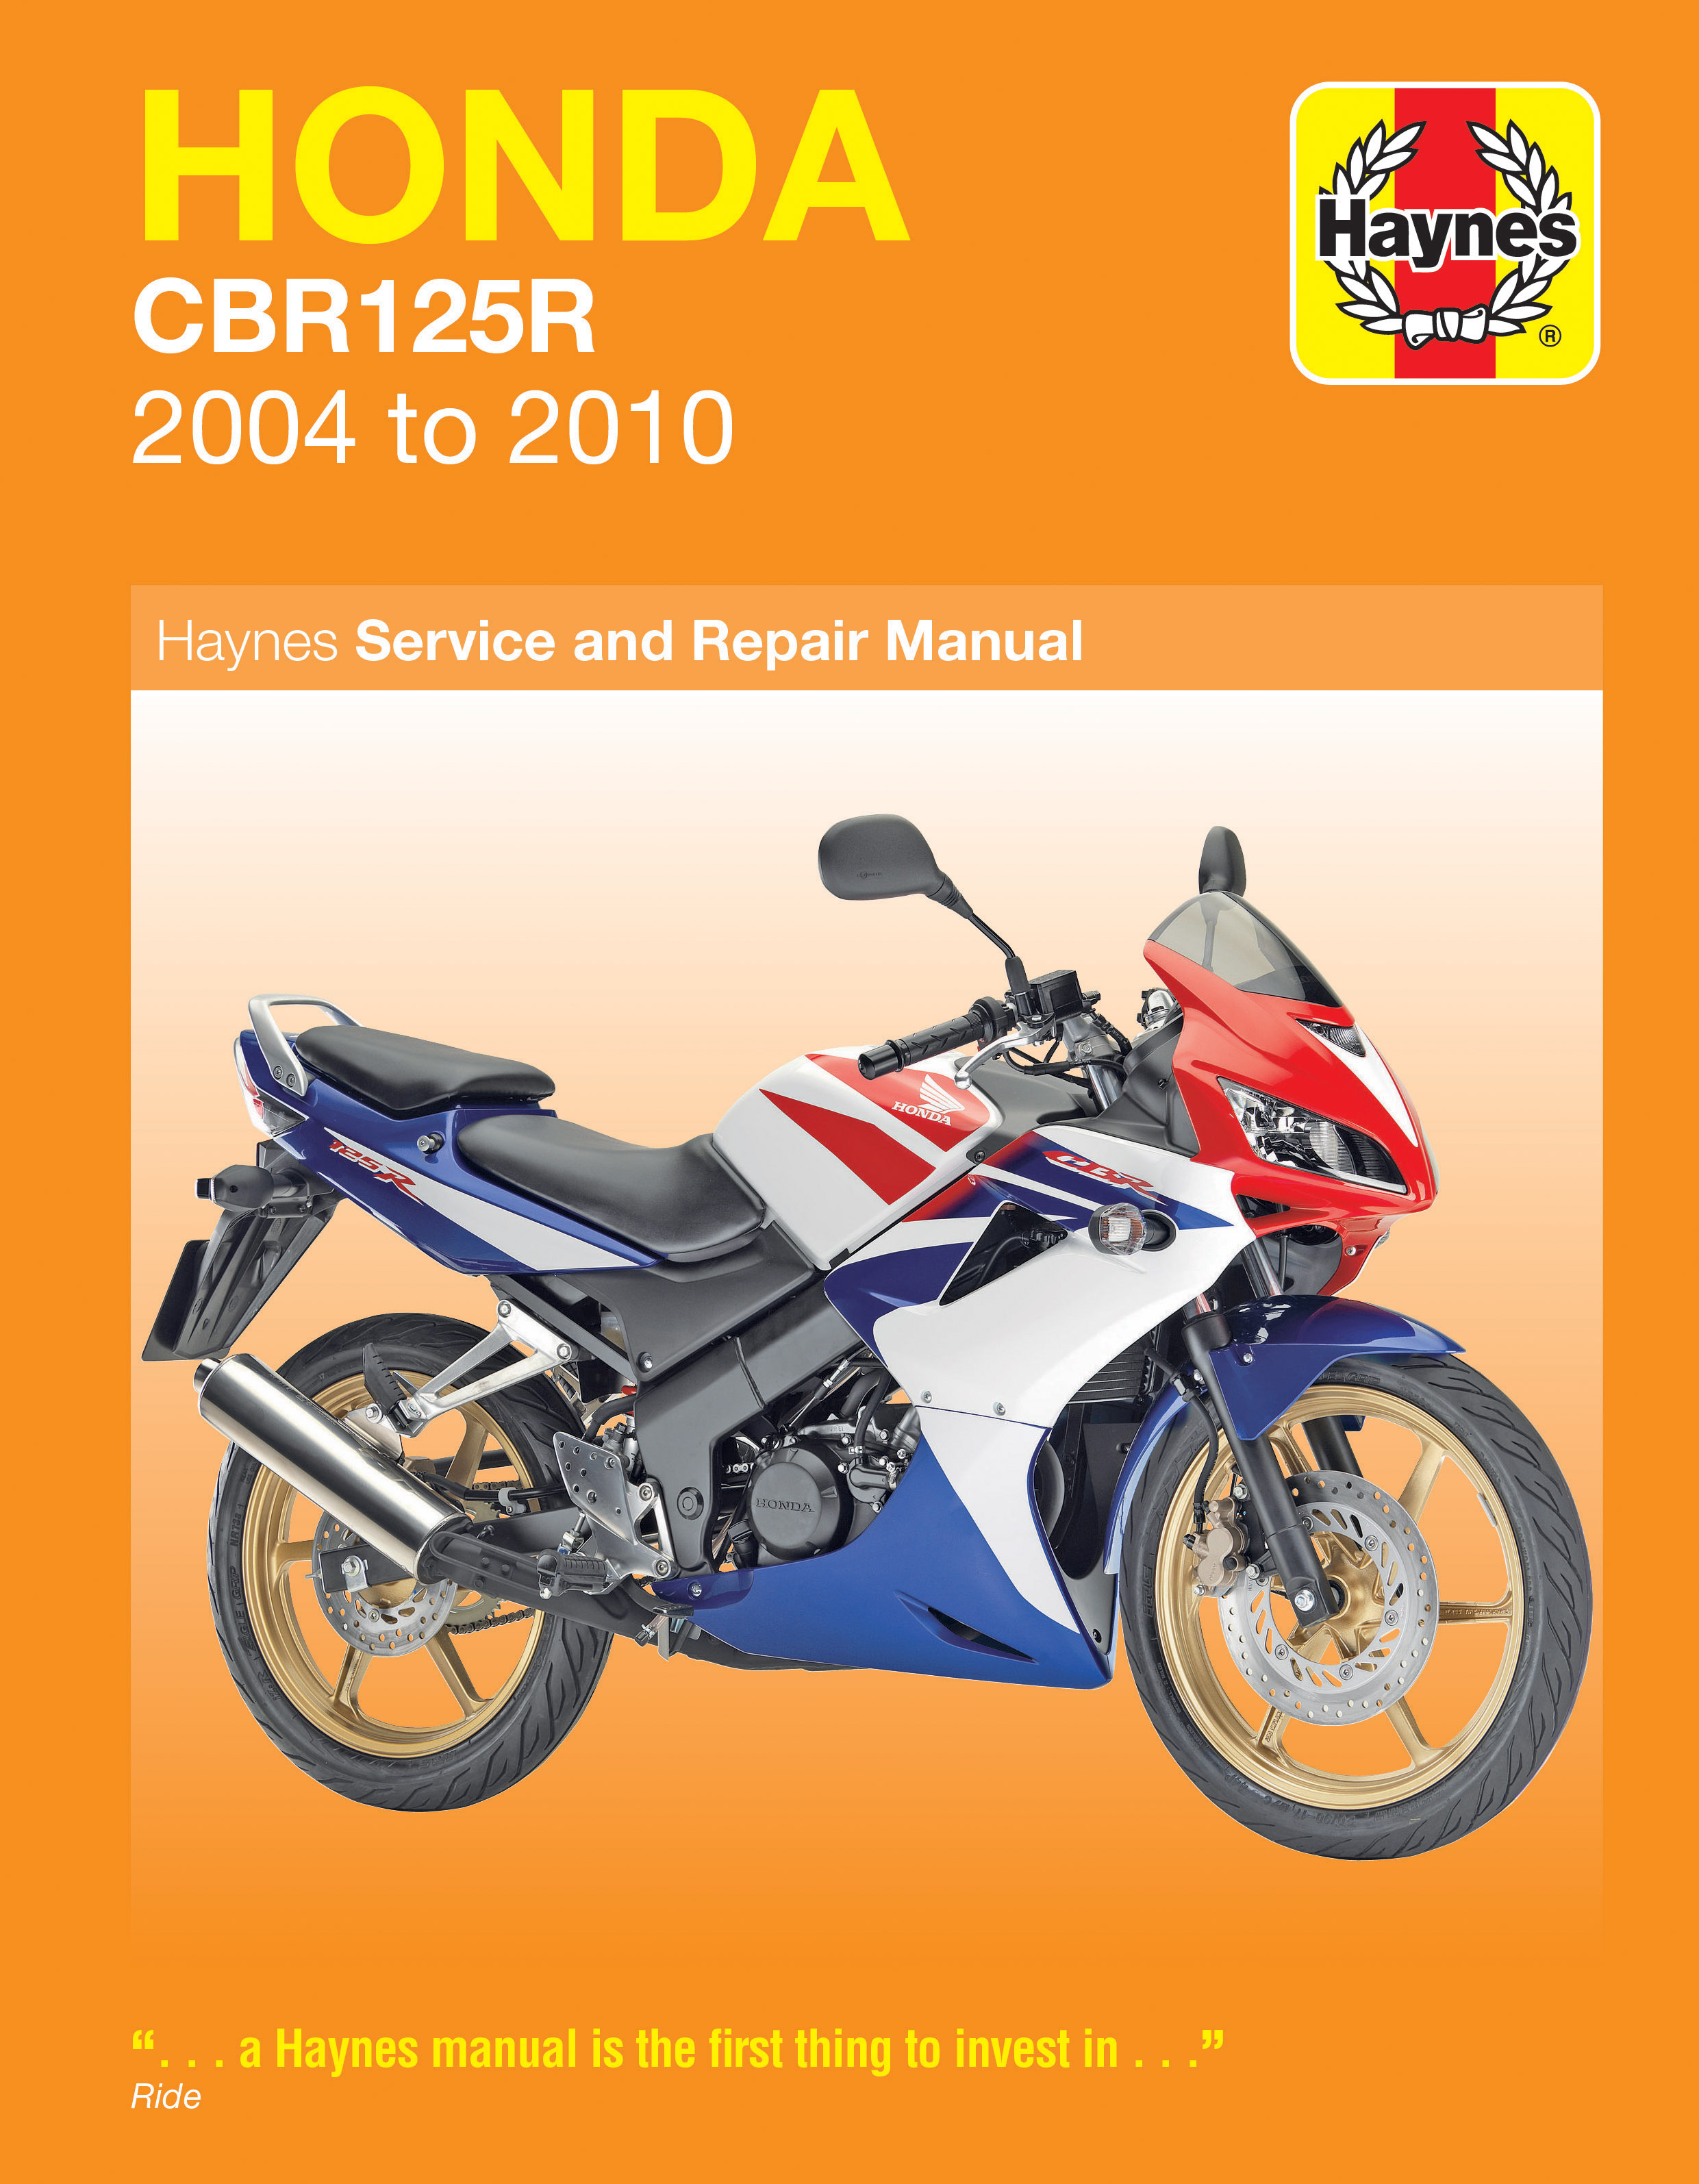 2007 honda cbr600rr service manual